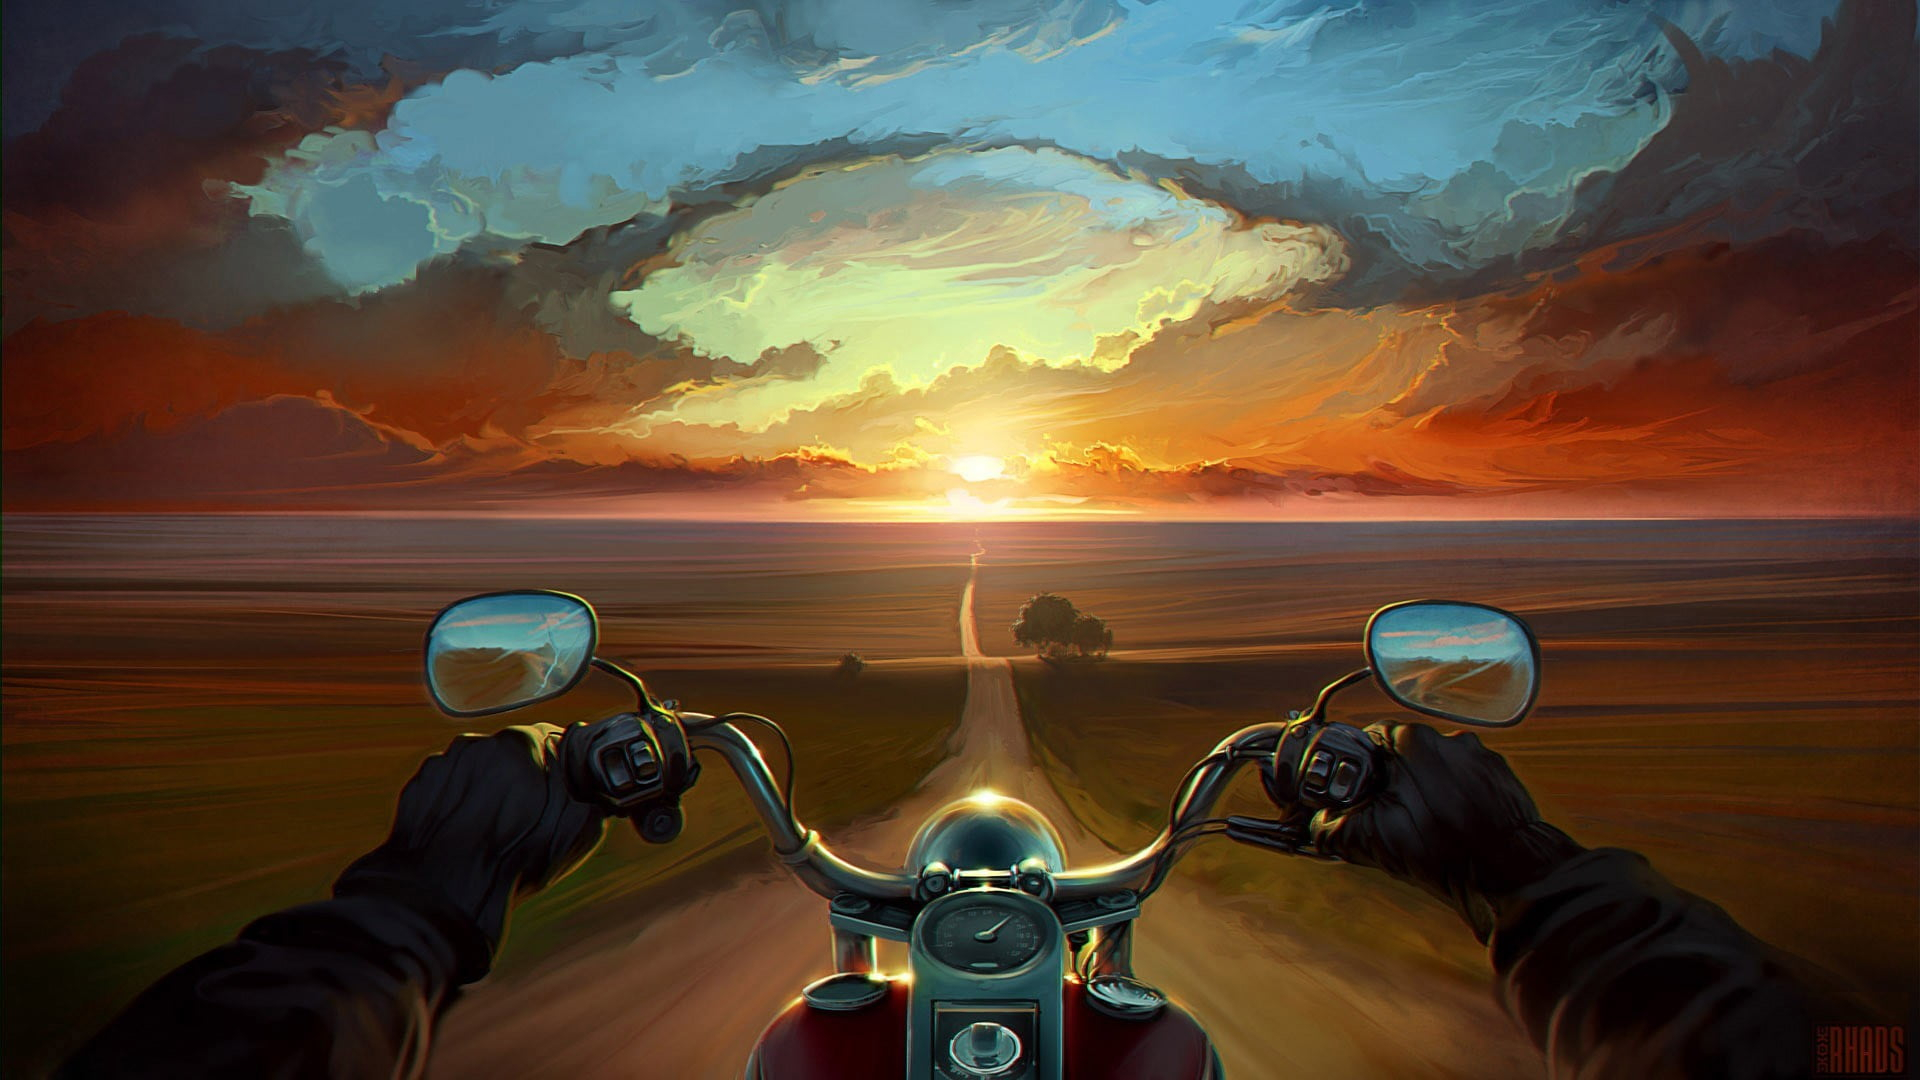 Wallpaper person riding motorcycle wallpaper, digital art, landscape, sunset